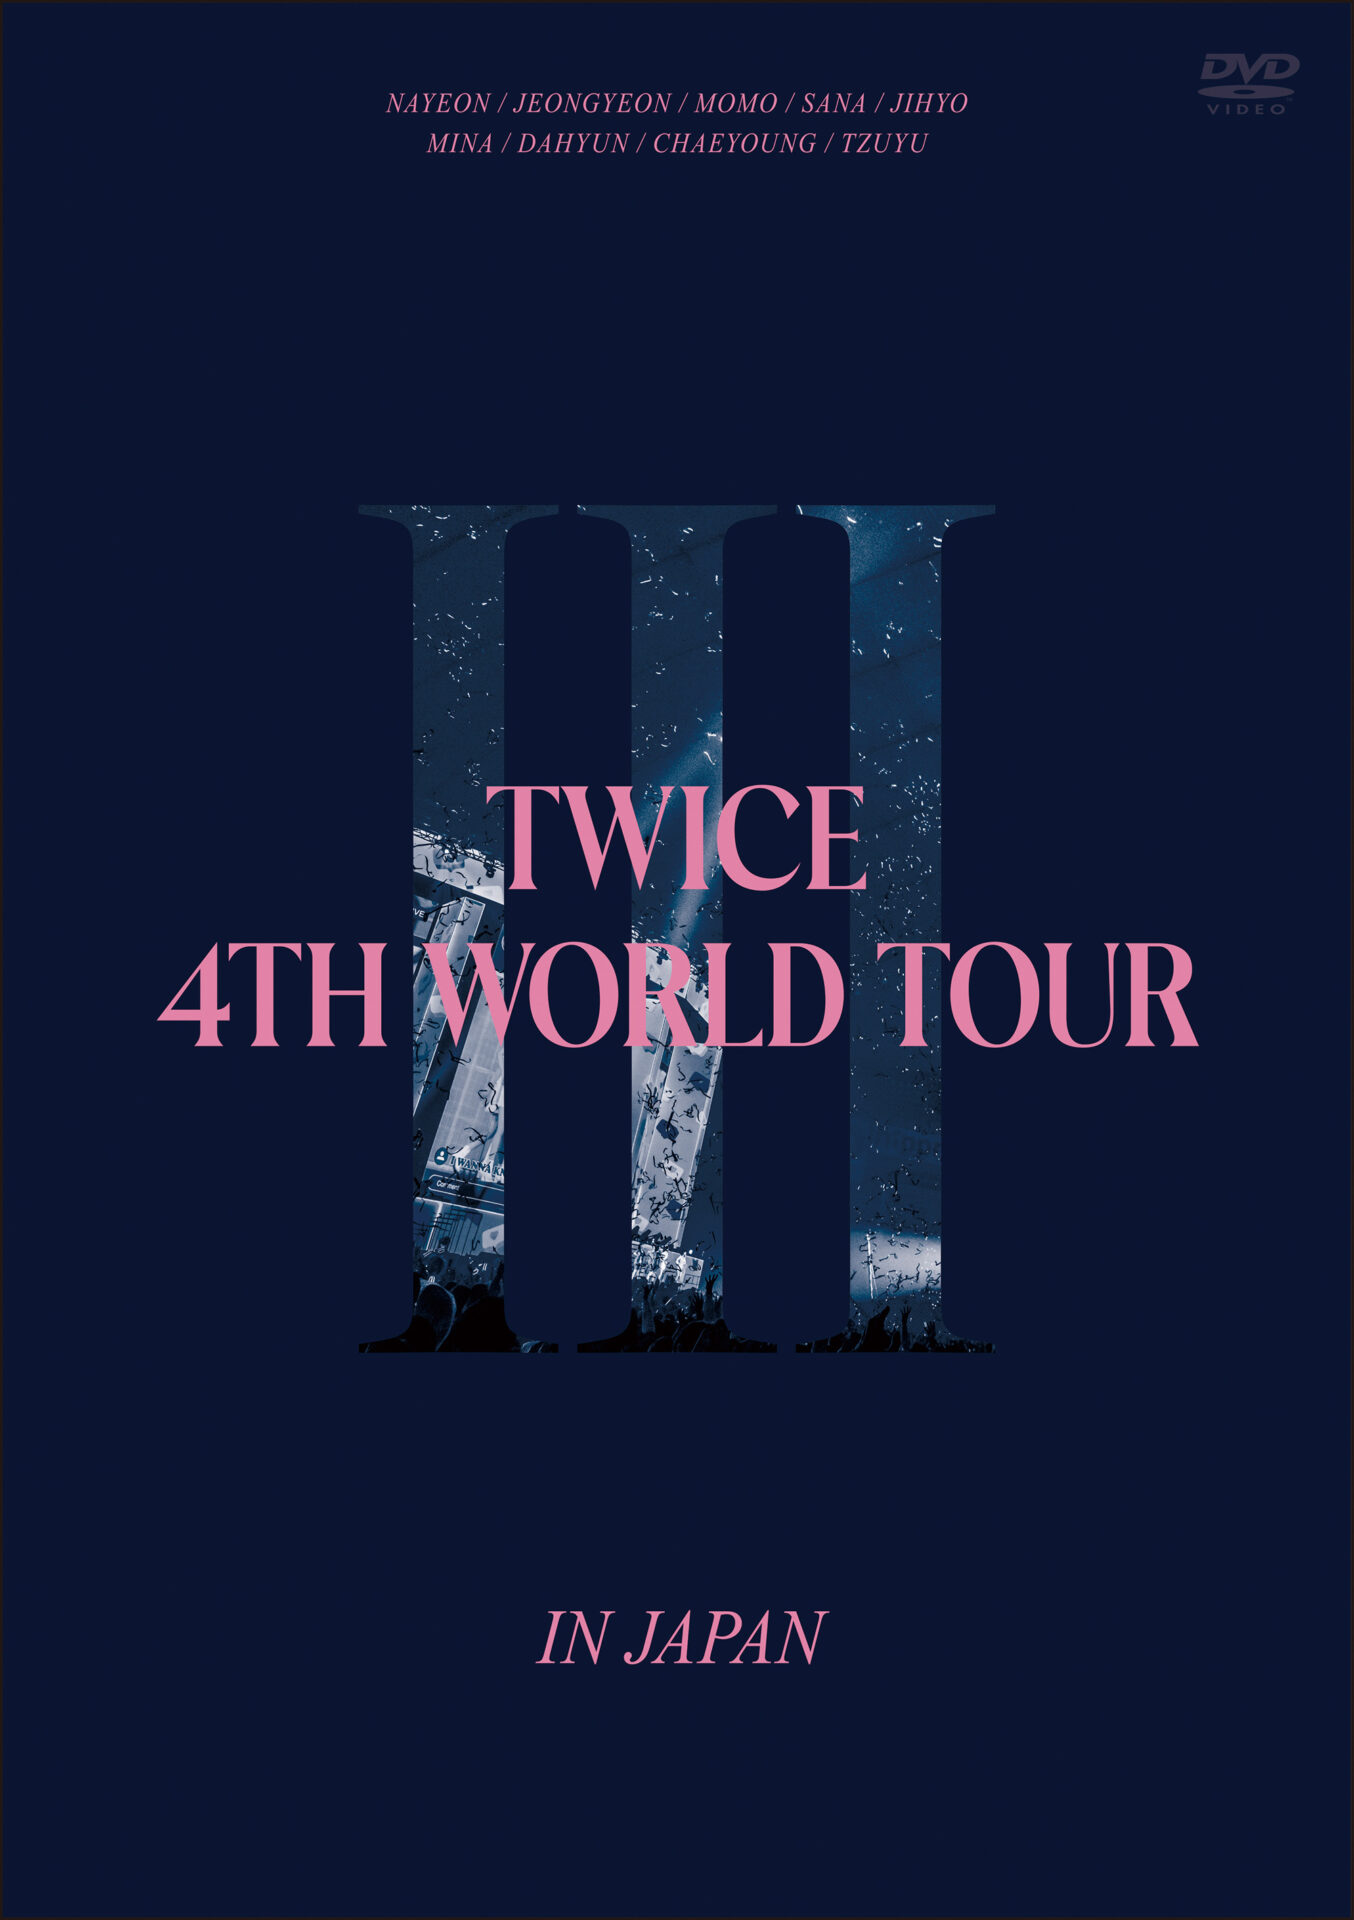  『TWICE 4TH WORLD TOUR 'III' IN JAPAN』通常盤ジャケット